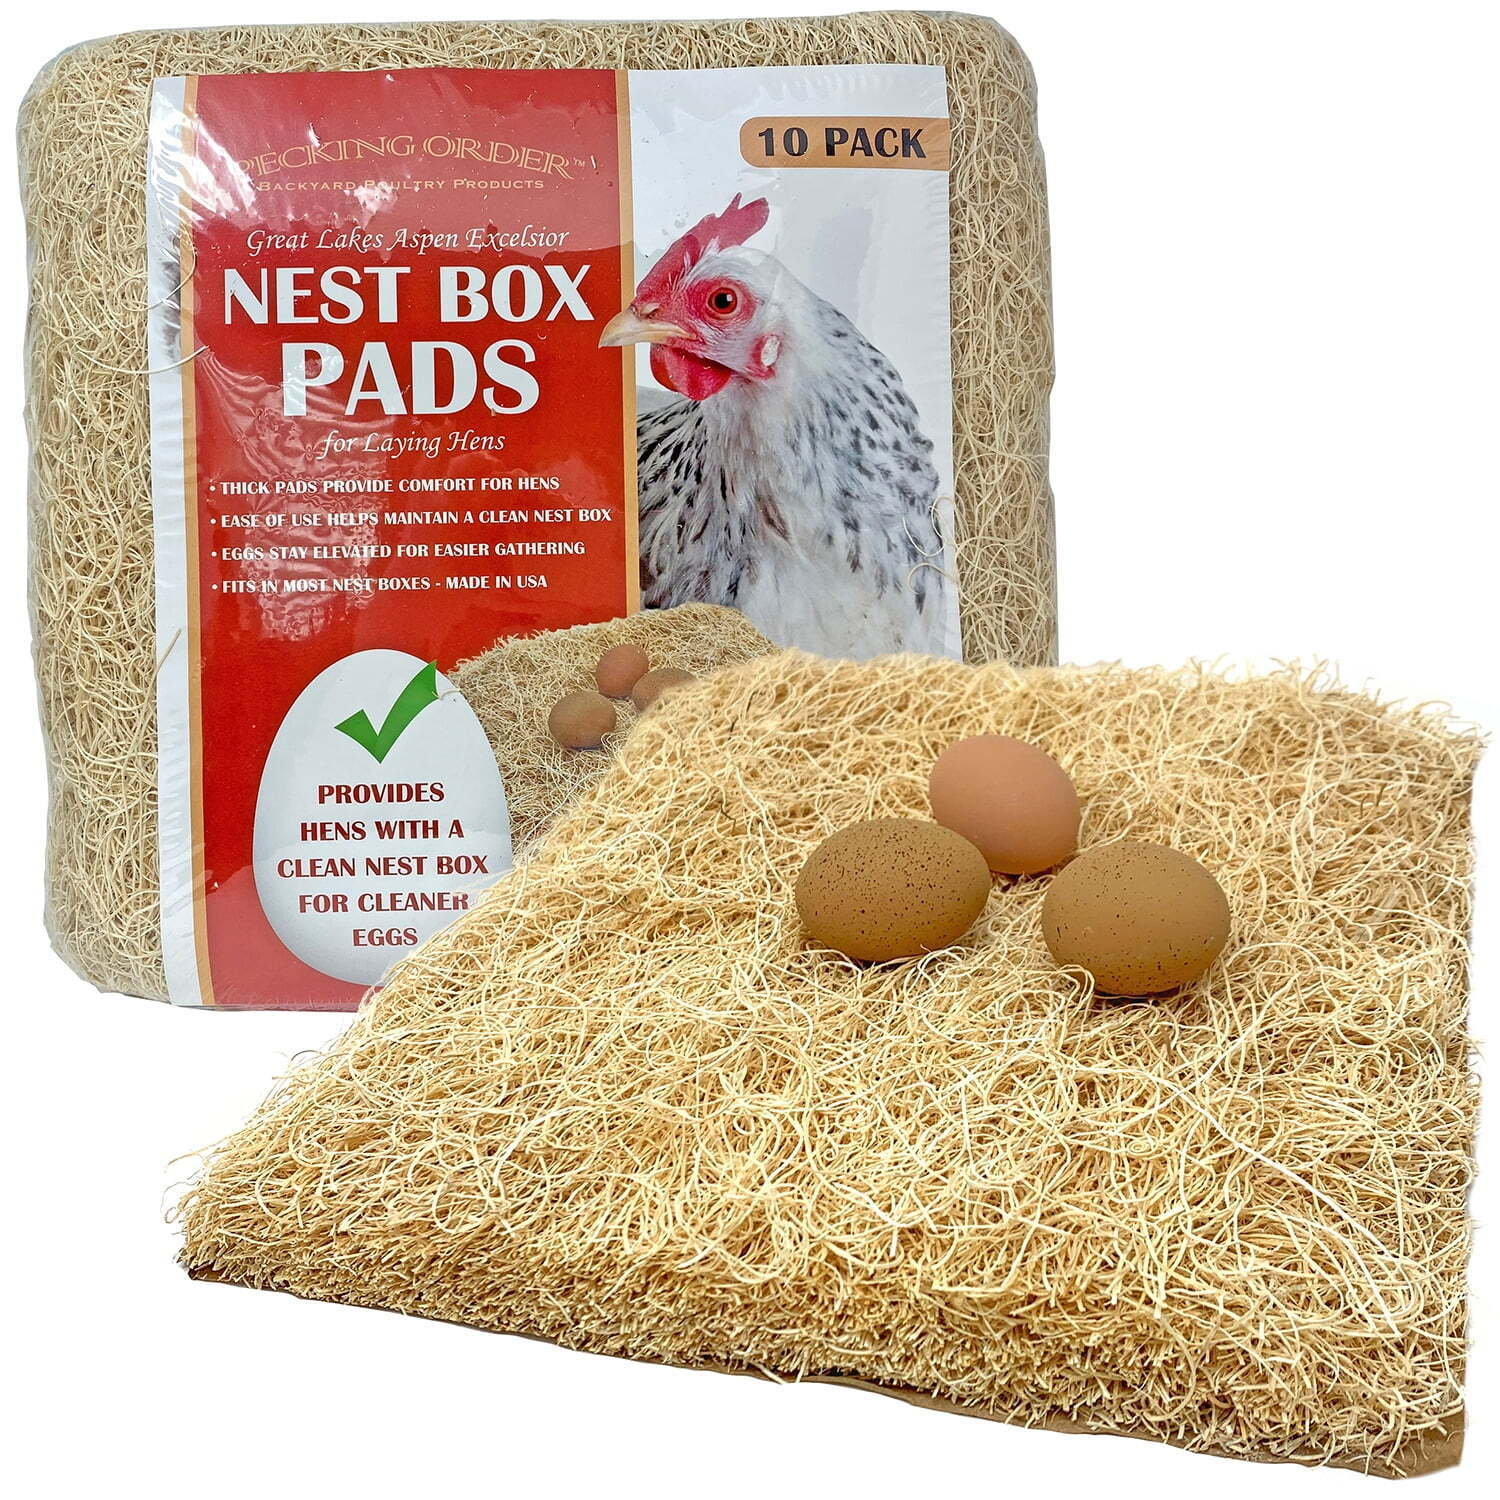 NEW, Chicken Nest Box Pads 10 Pack